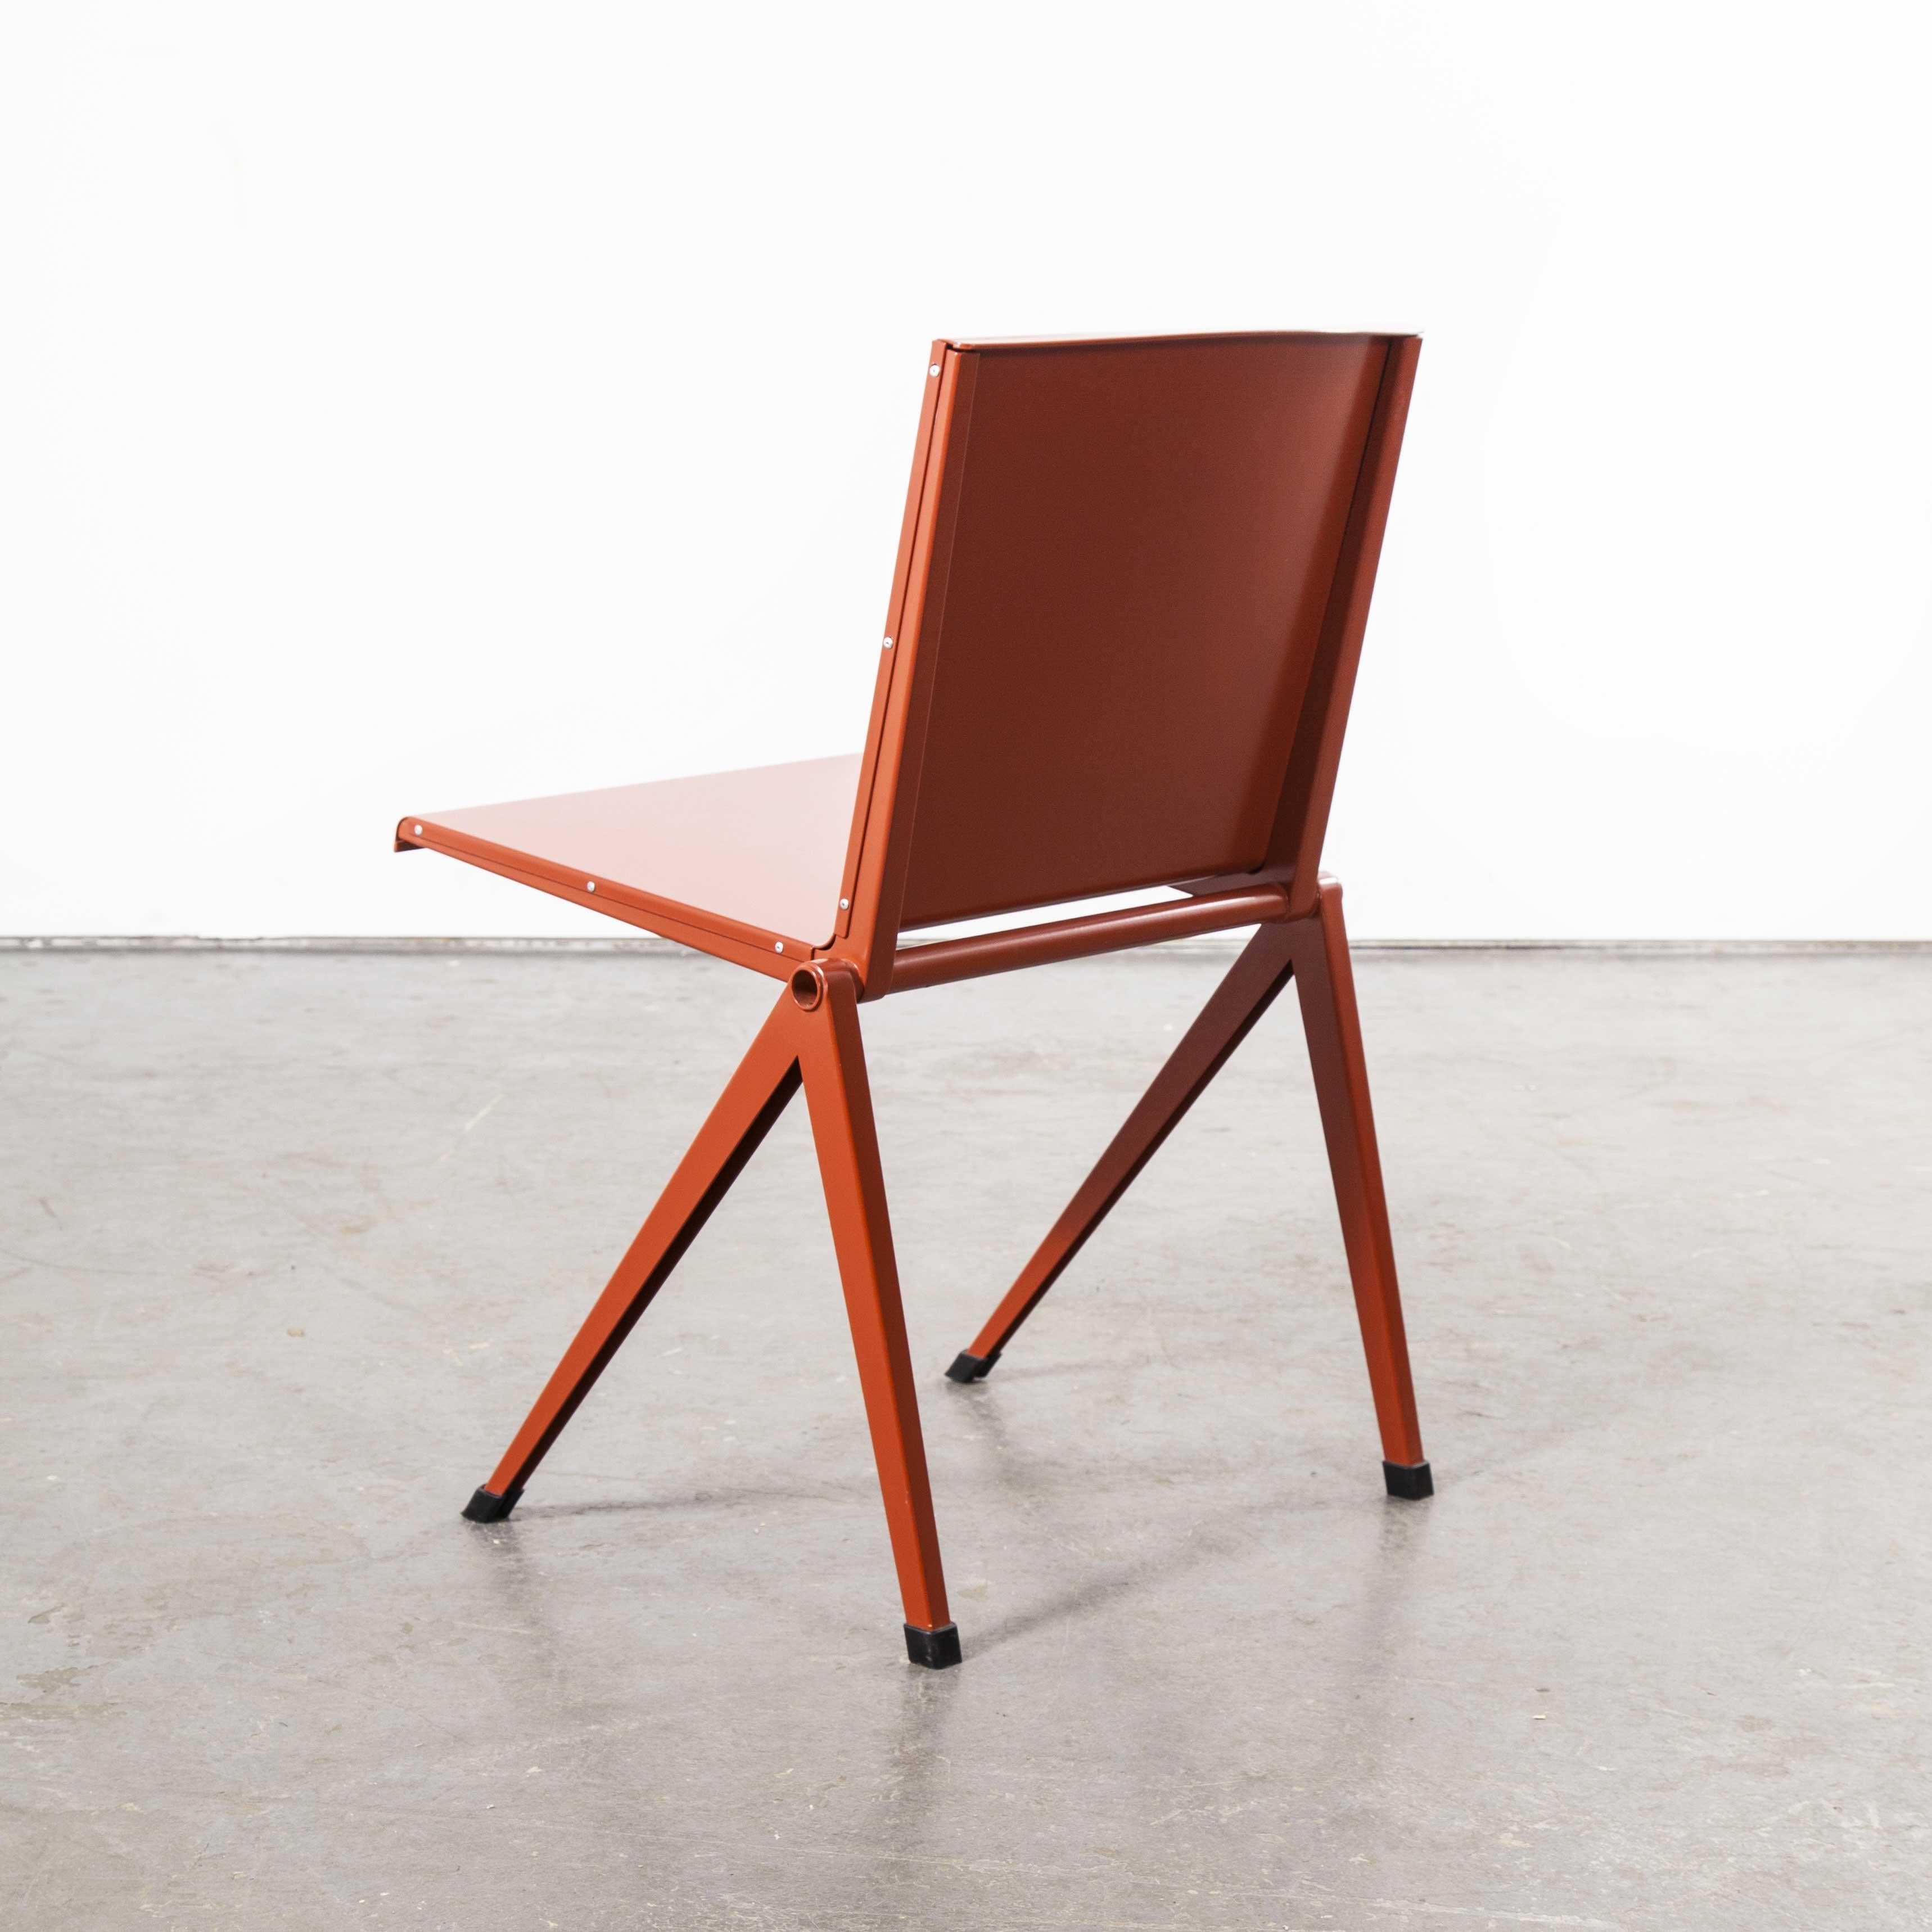 Mondial Chair by Gispen - Gerrit & Wim Rietveld - Original 1